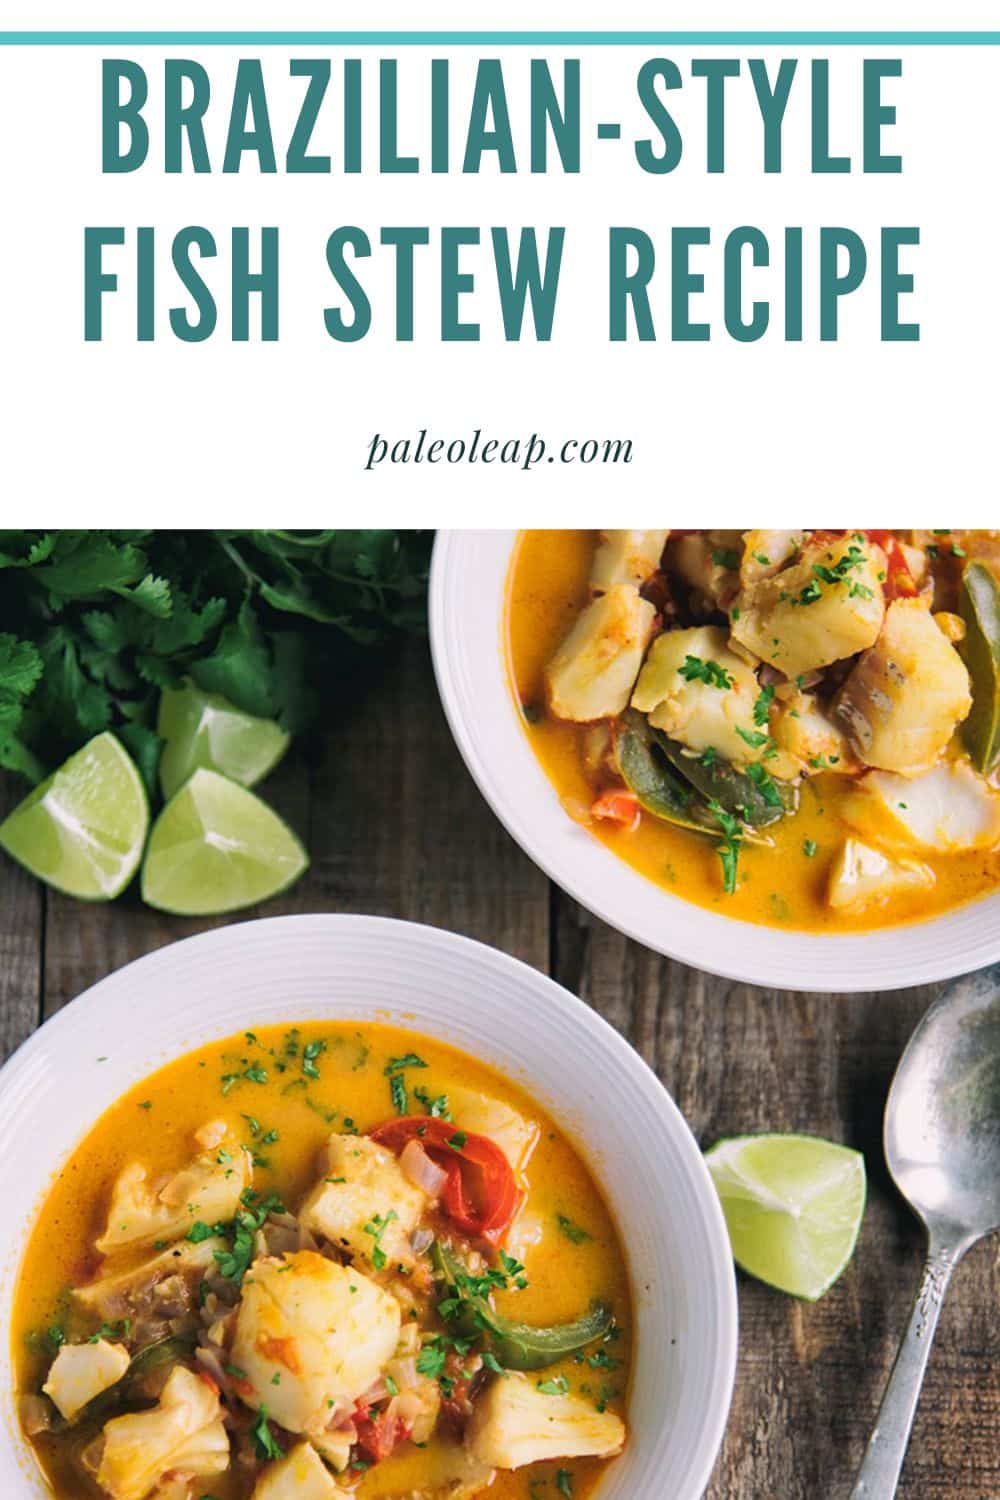 Brazilian-Style Fish Stew Recipe | Paleo Leap